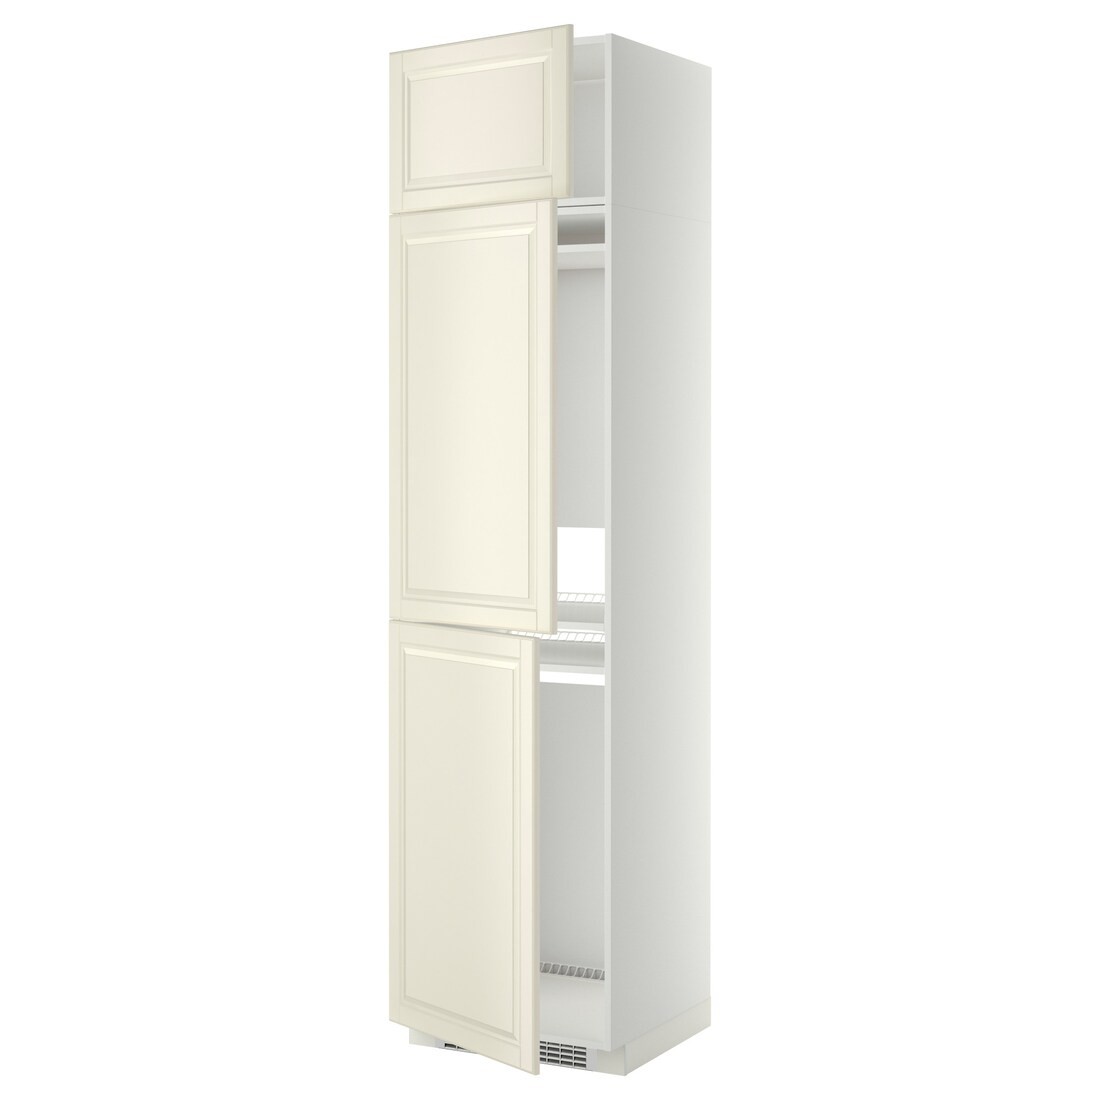 IKEA METOD МЕТОД Высокий шкаф для холодильника / морозильника / 3 дверцы, белый / Bodbyn кремовый, 60x60x240 см 29469884 294.698.84